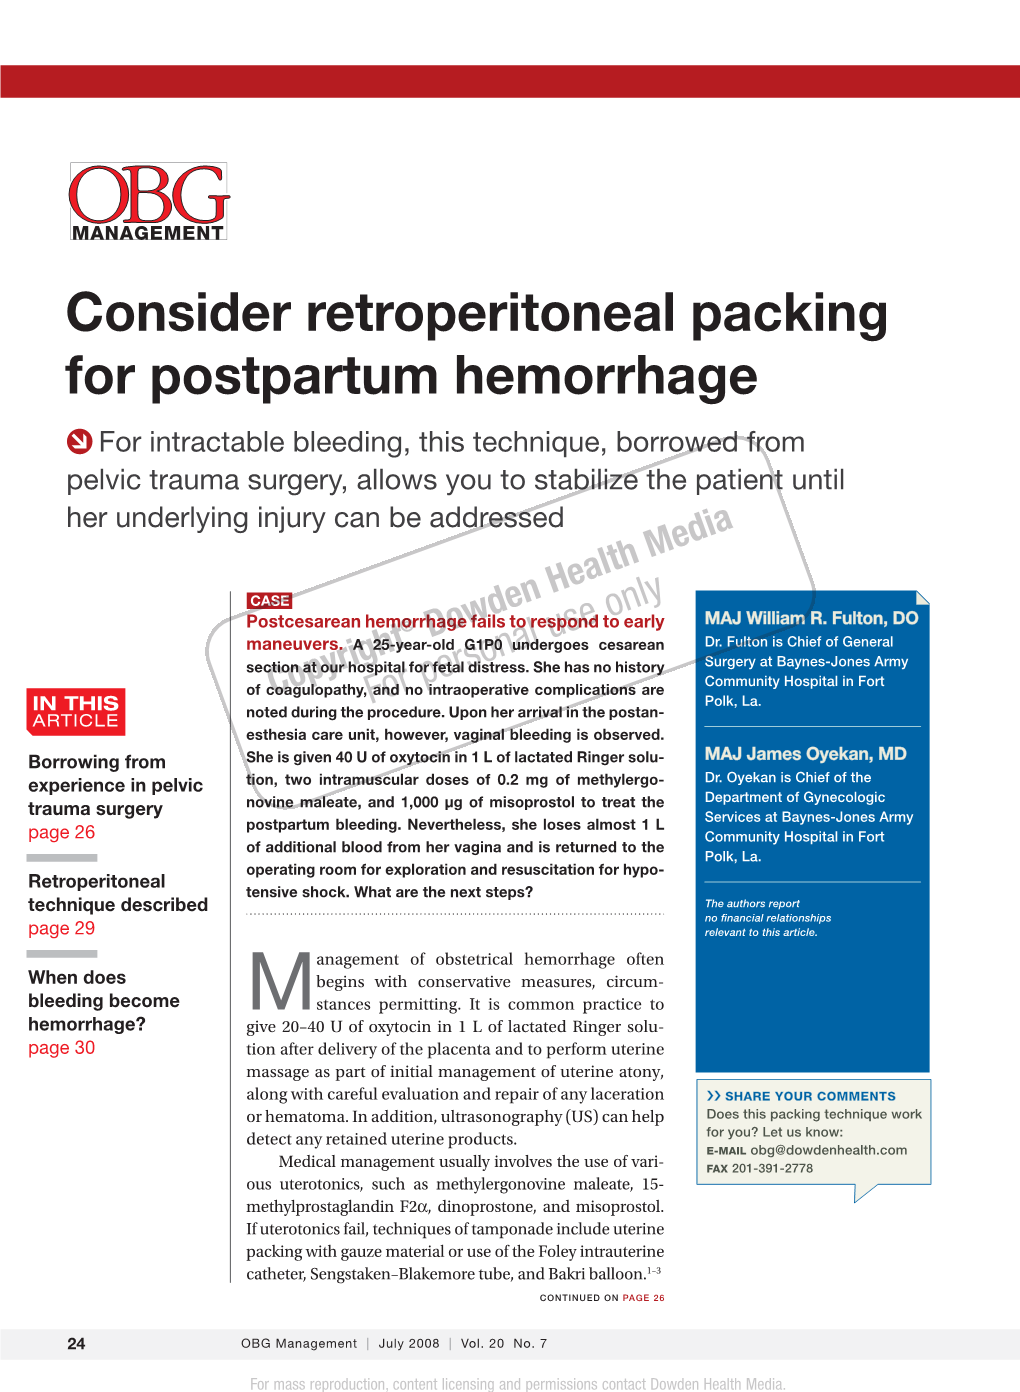 Consider Retroperitoneal Packing for Postpartum Hemorrhage